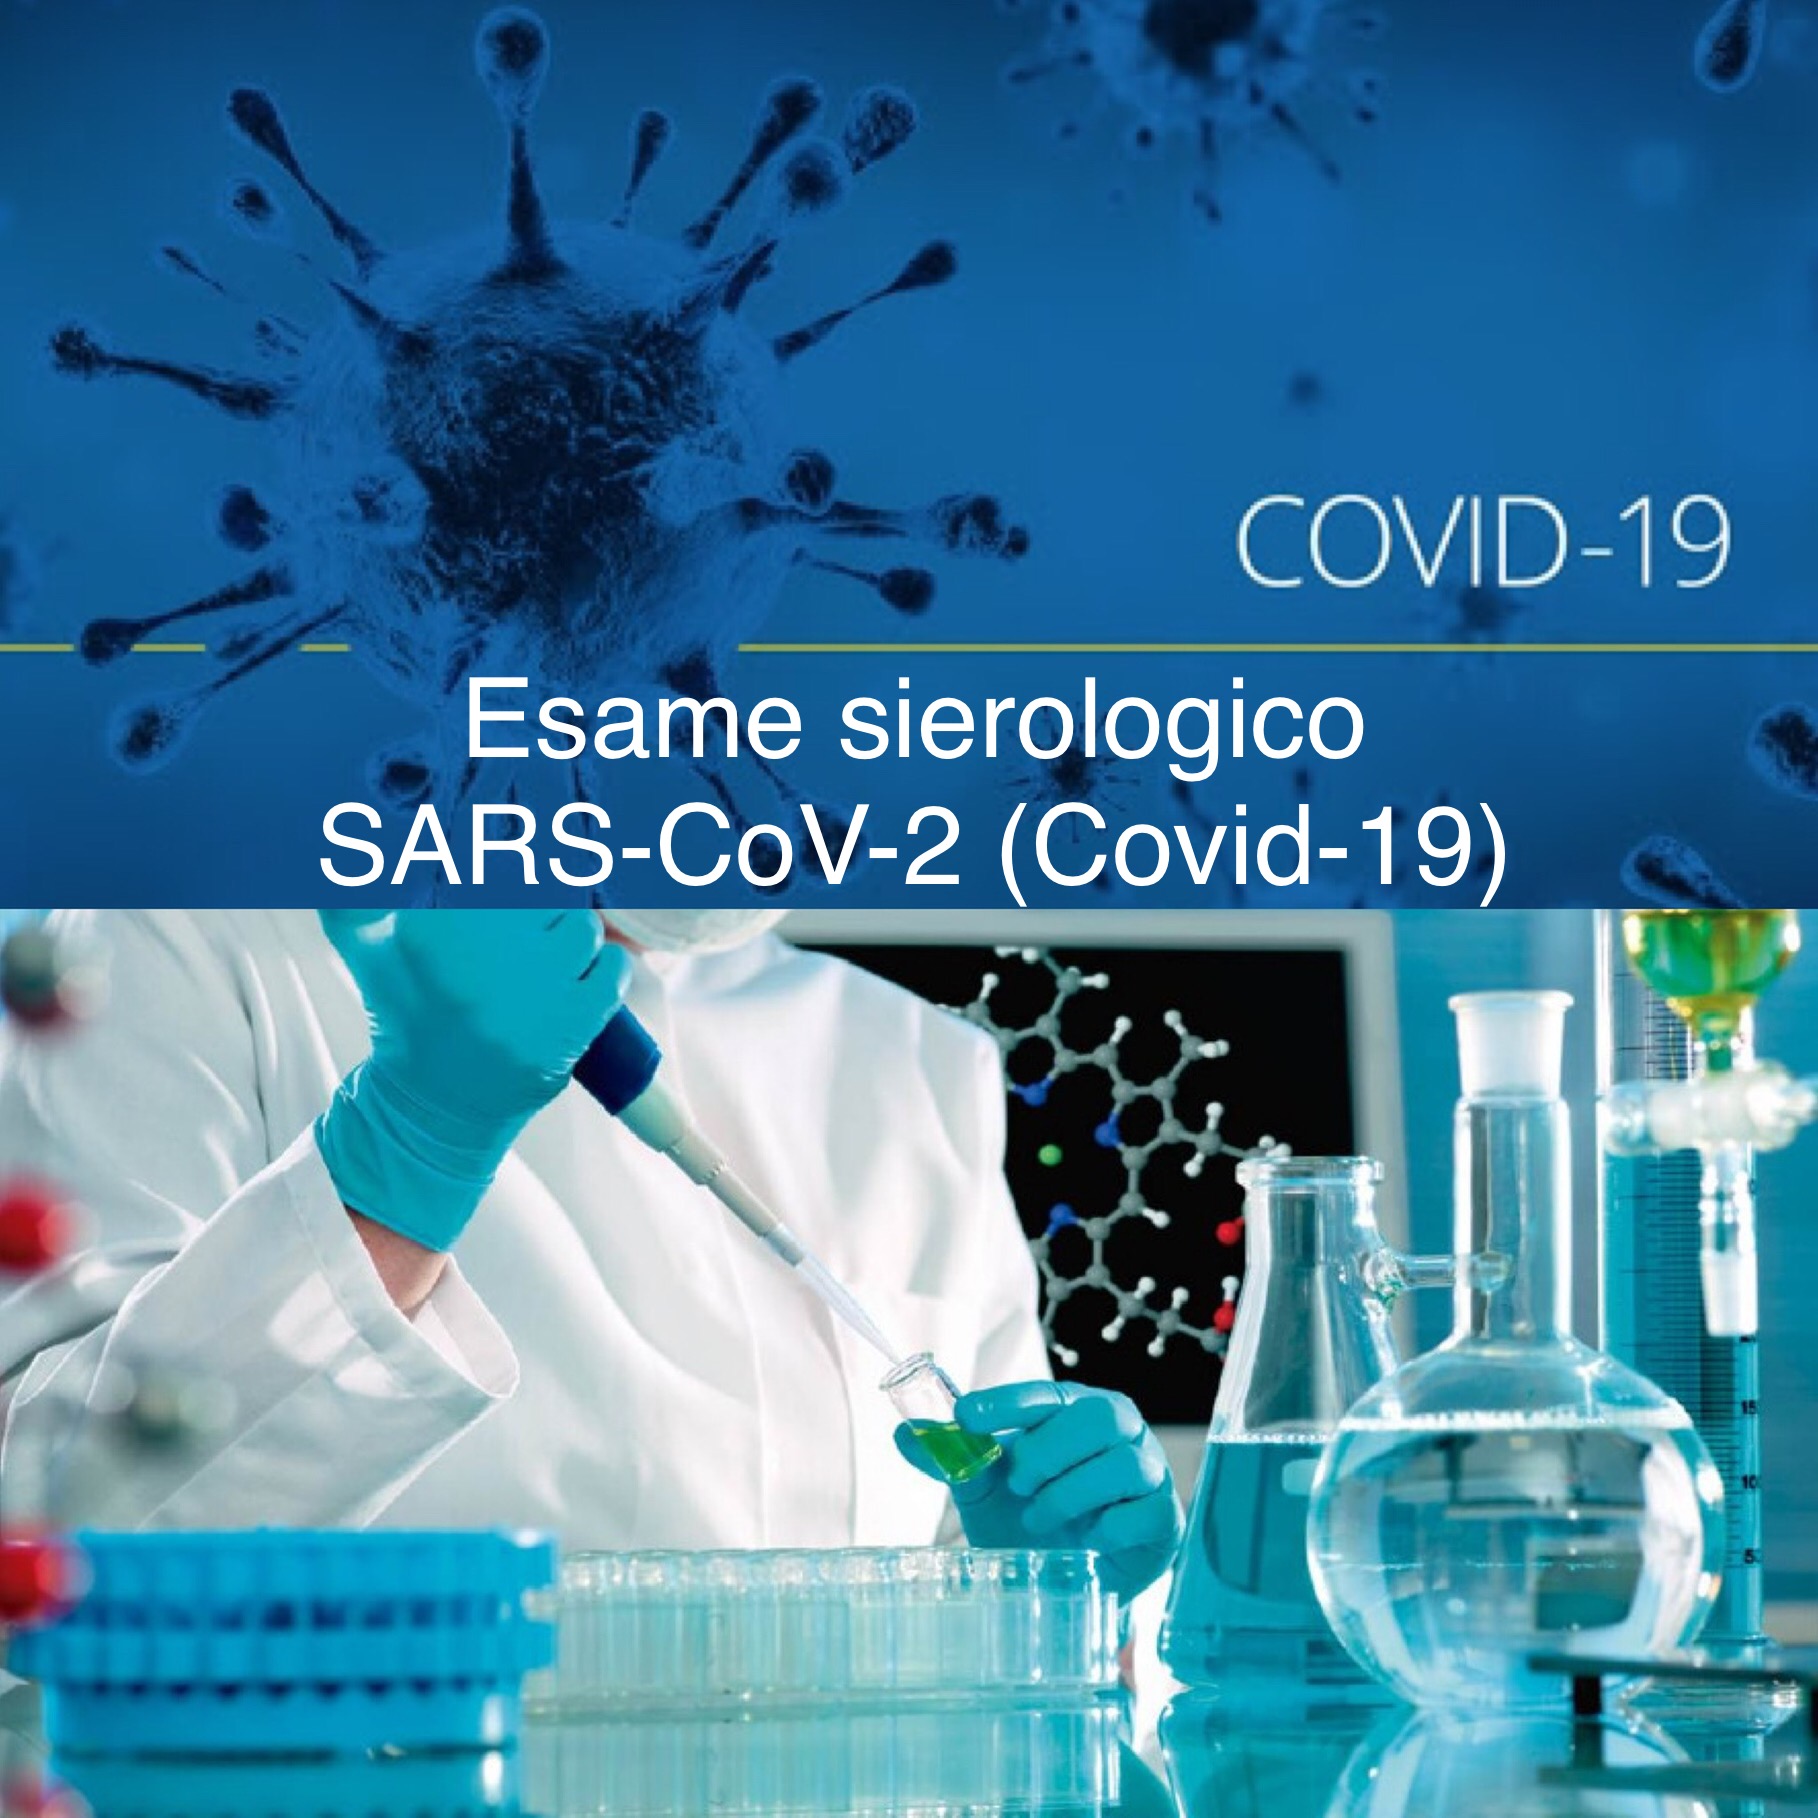 SARS-Cov-2 serological test